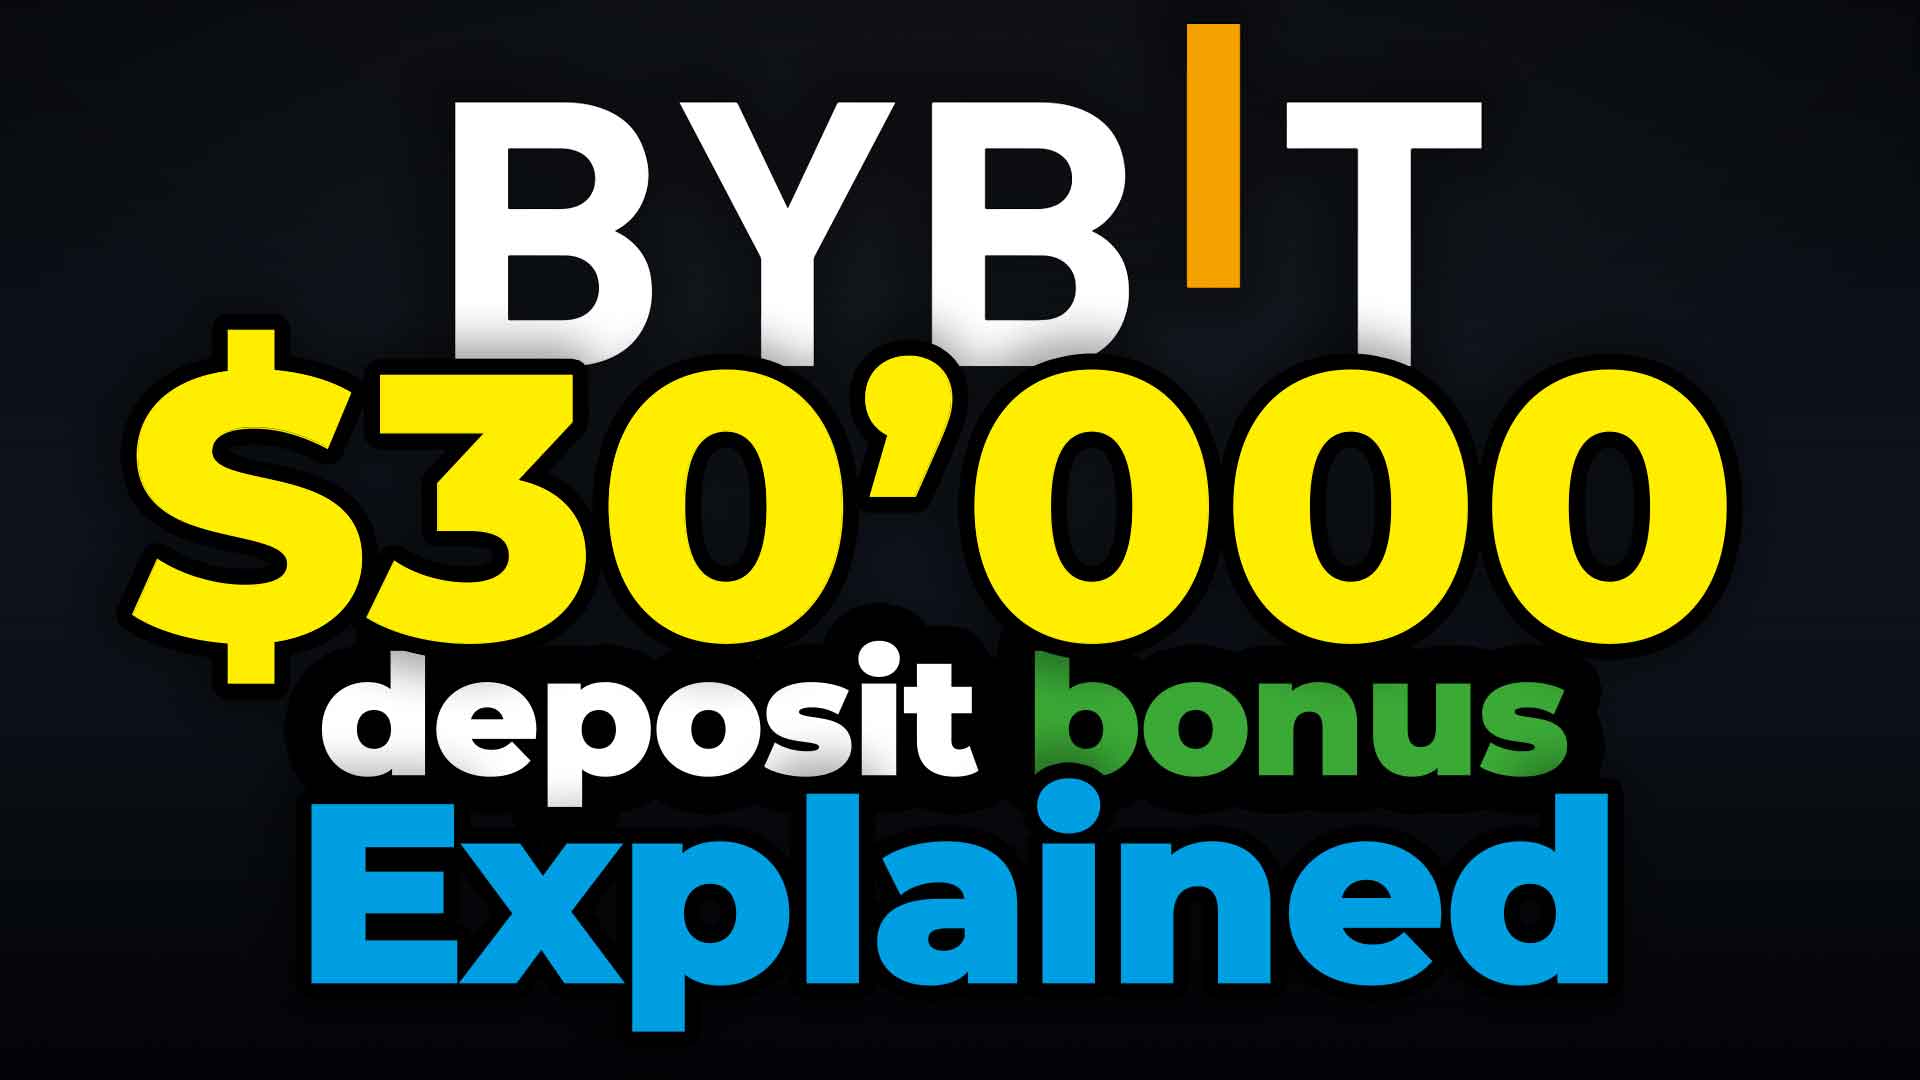 Bybit $30,000 Deposit Bonus Explained